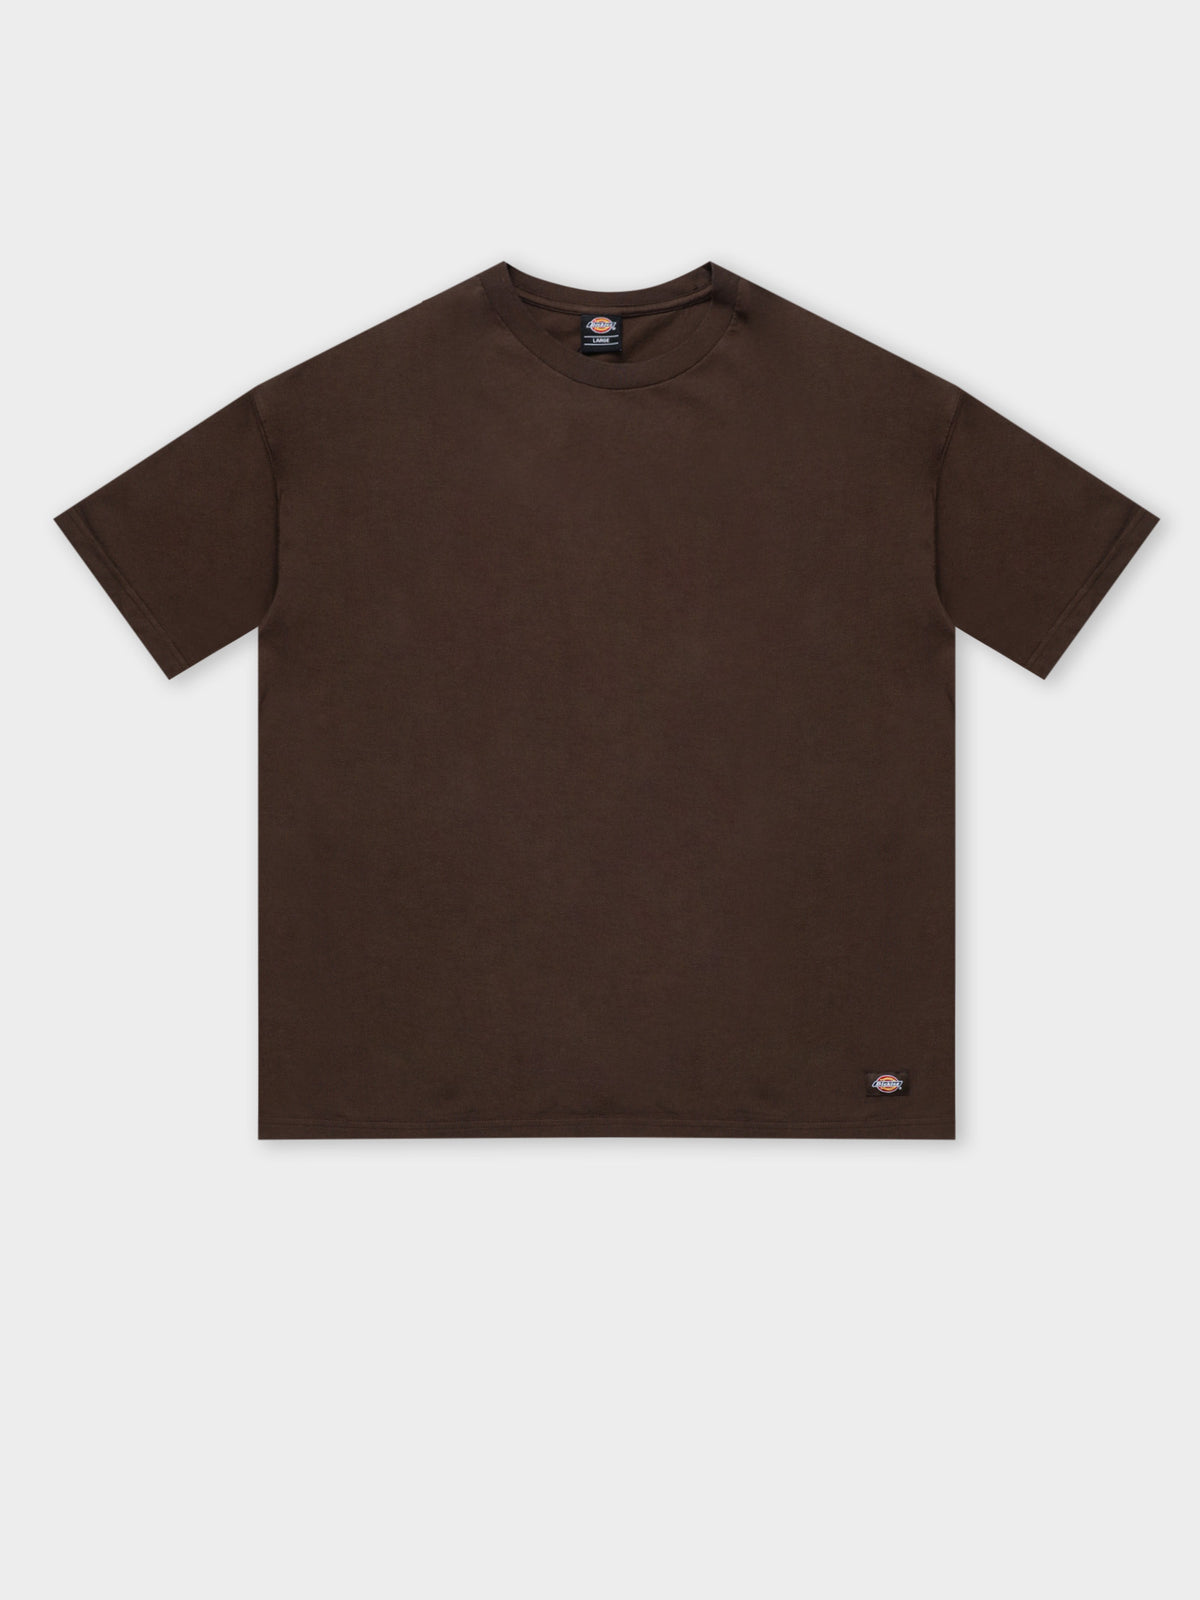 330 Box T-Shirt in Chestnut